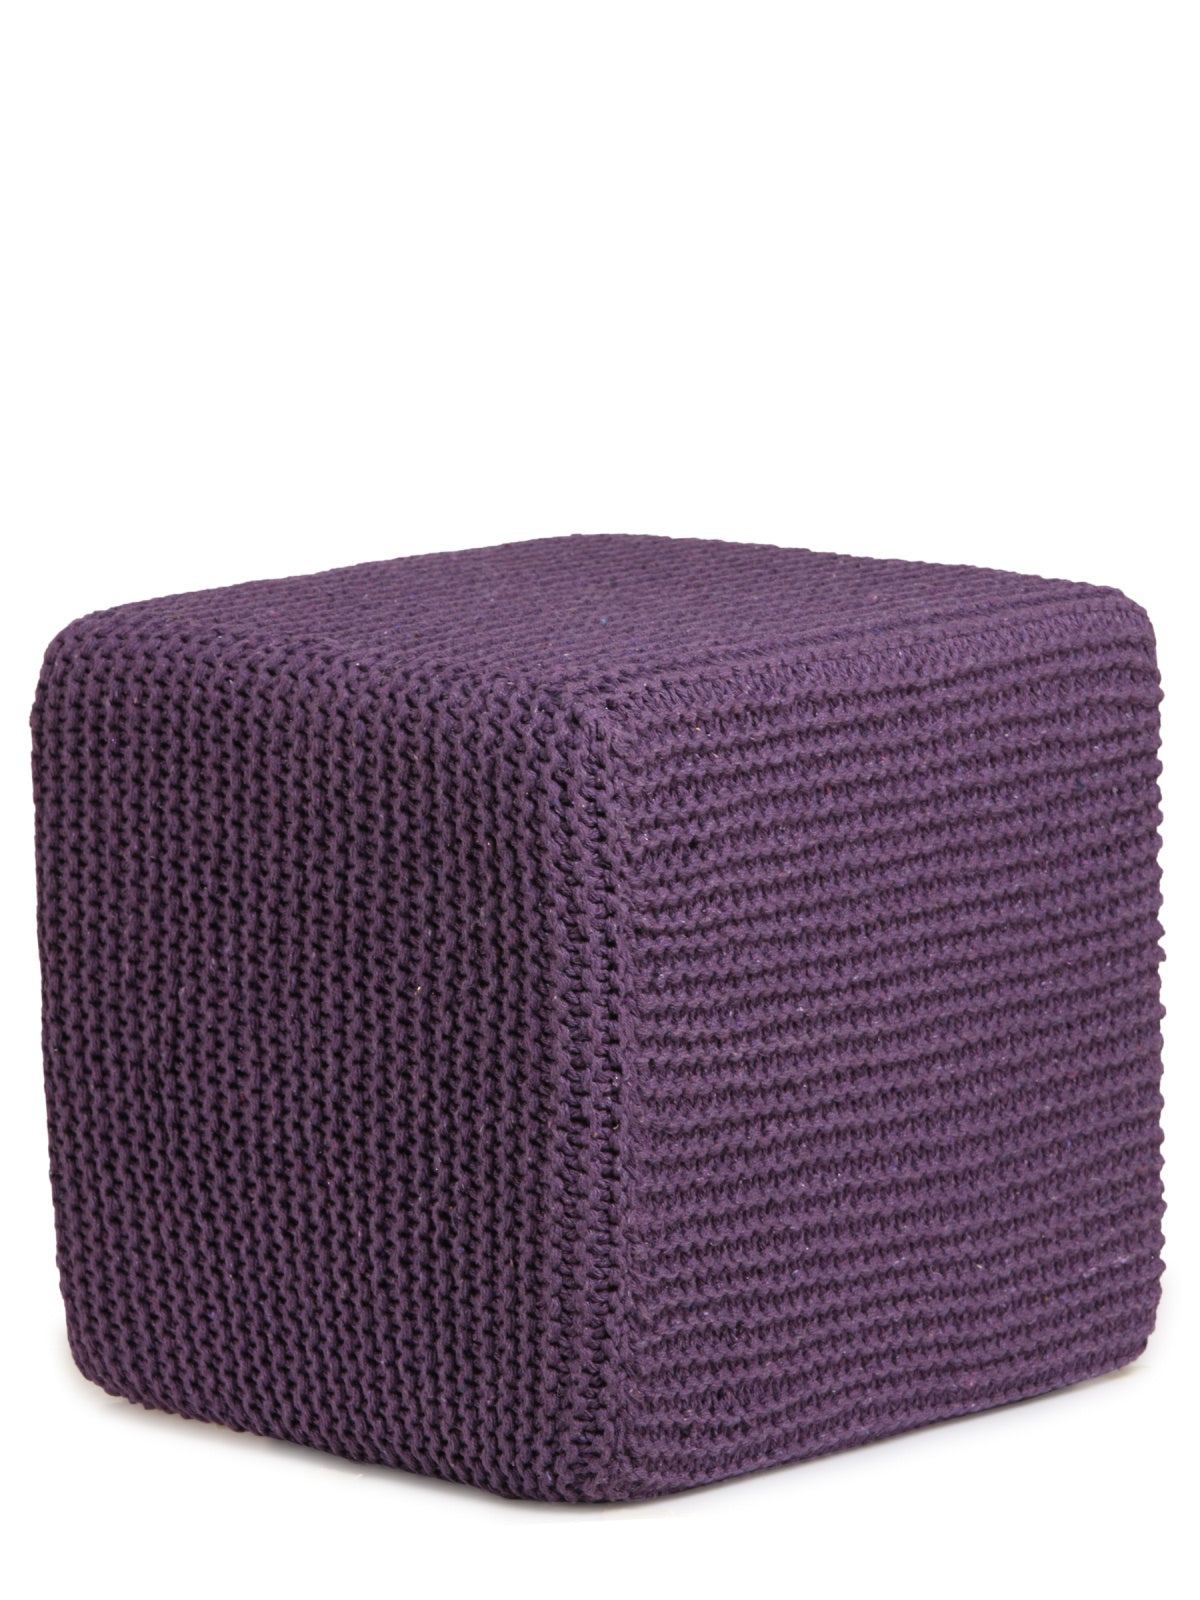 Purple Square Shape Ottoman/Pouffe